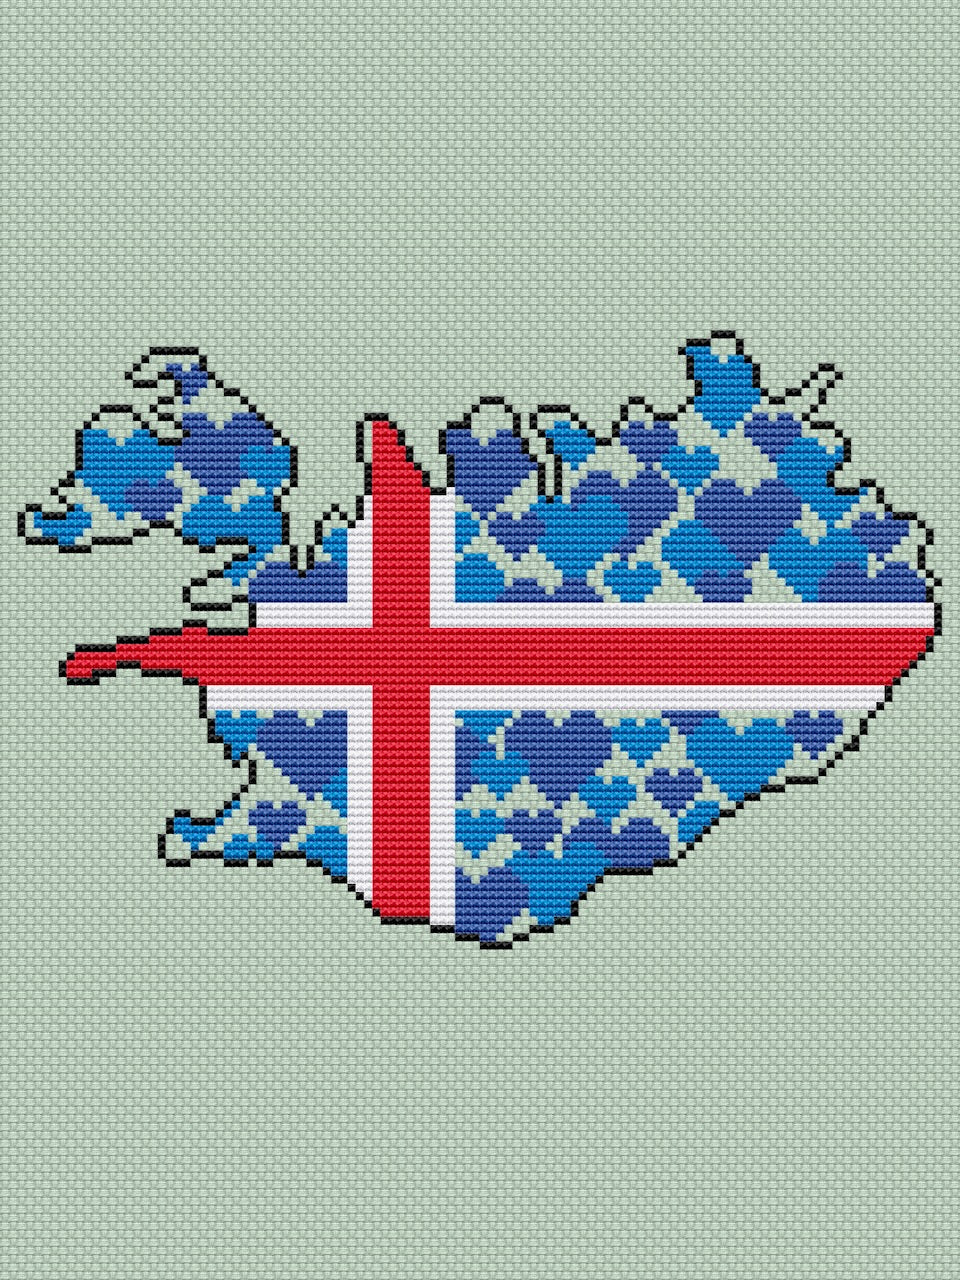 Iceland flag cross stitch pattern